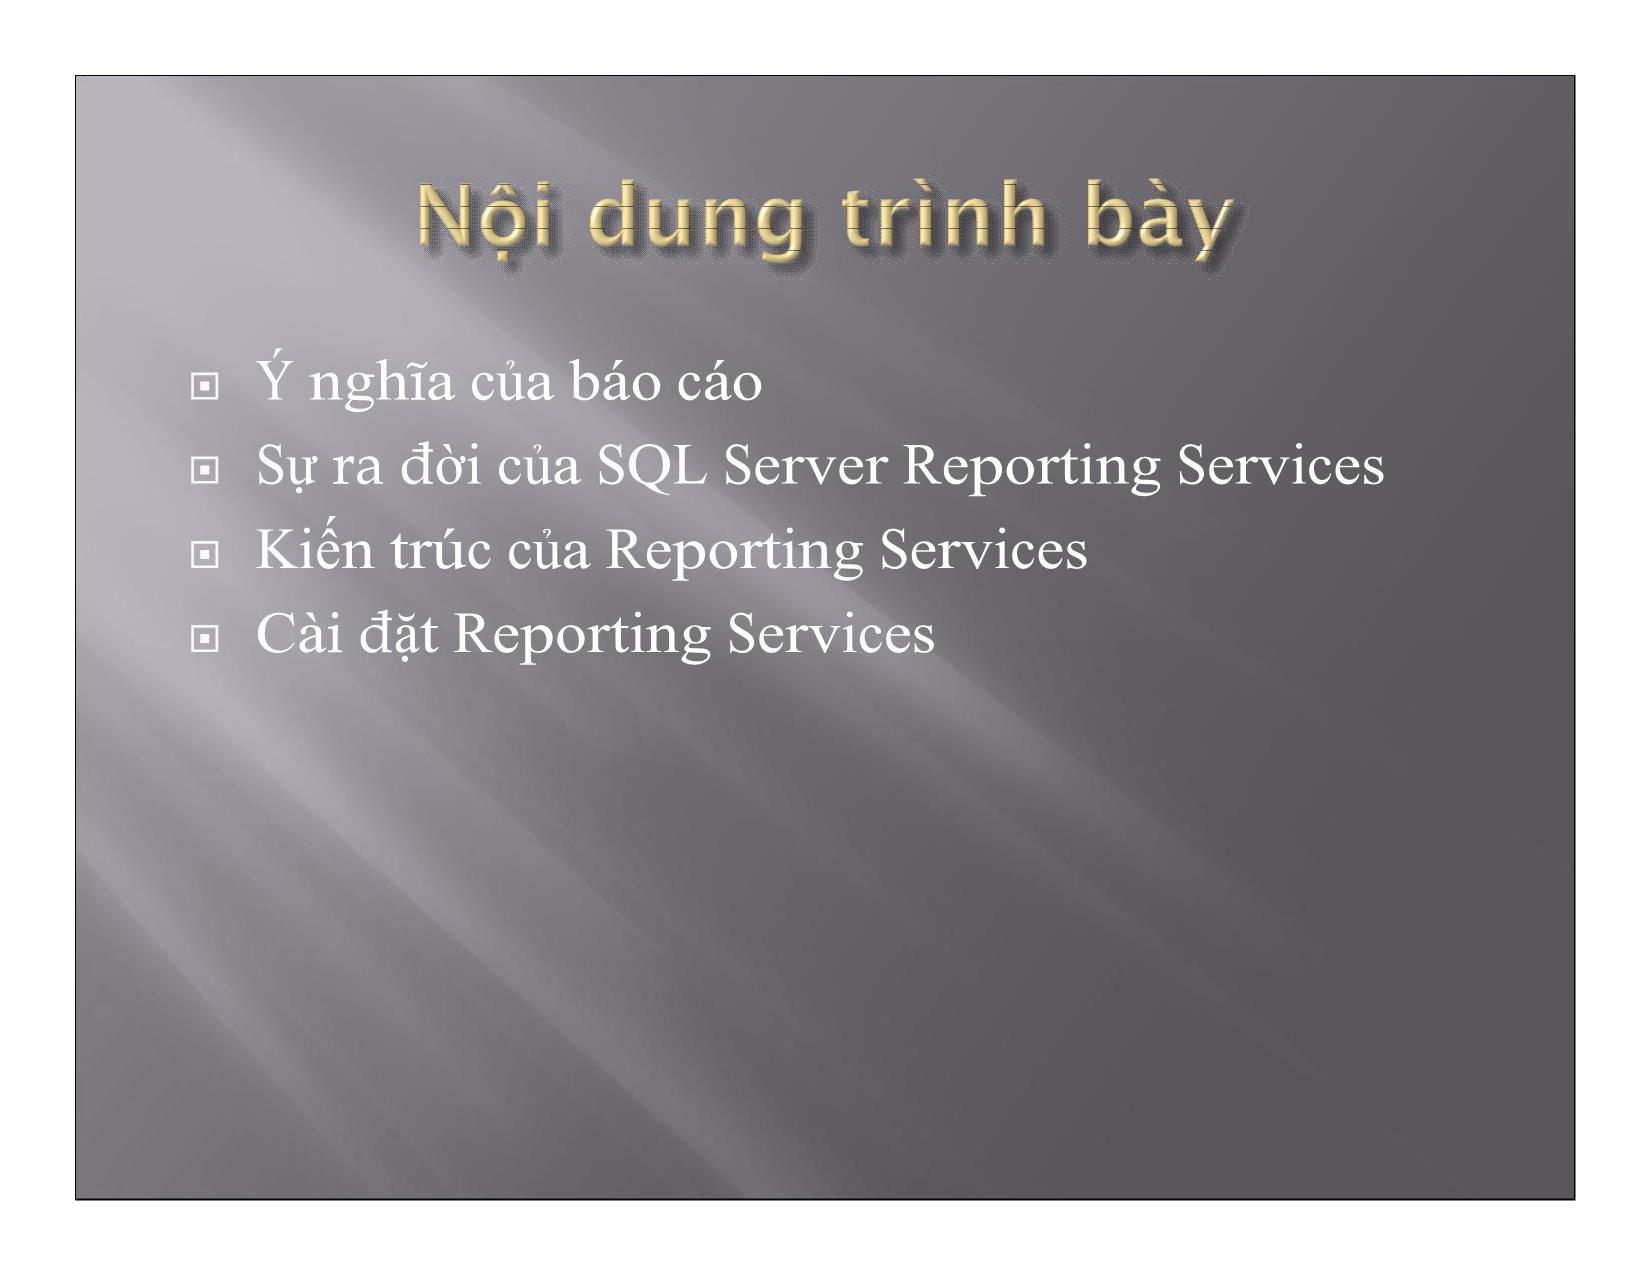 SQL Server Reporting Services trang 2